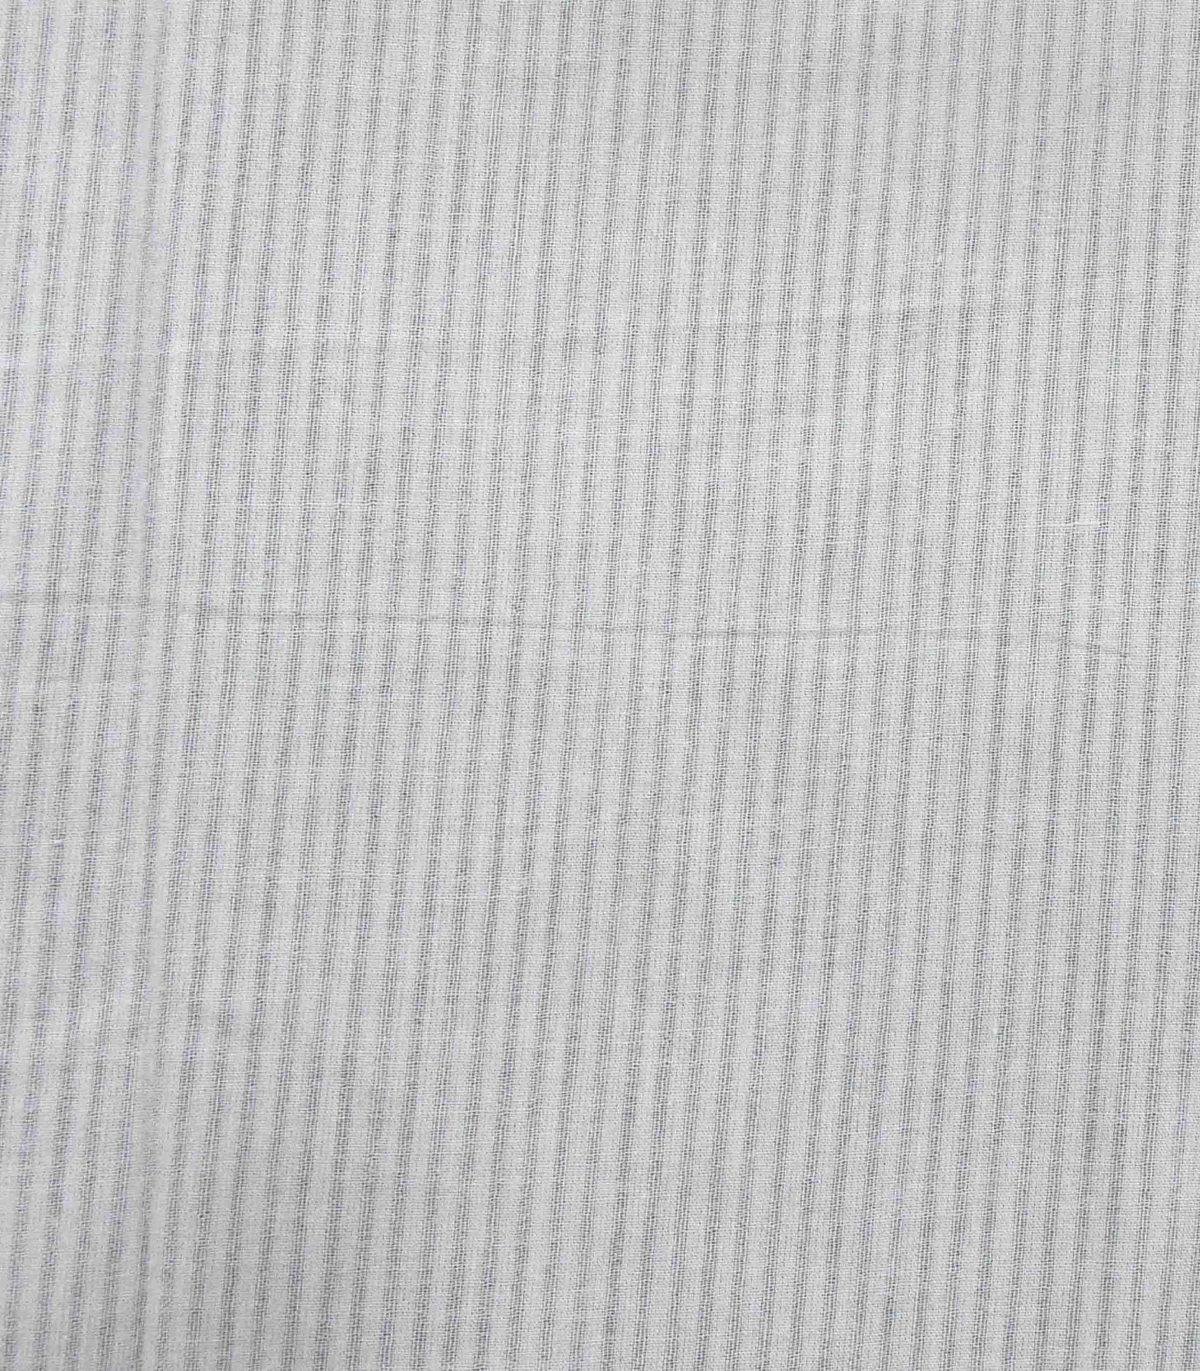 Cotton Missdent Woven Fabric